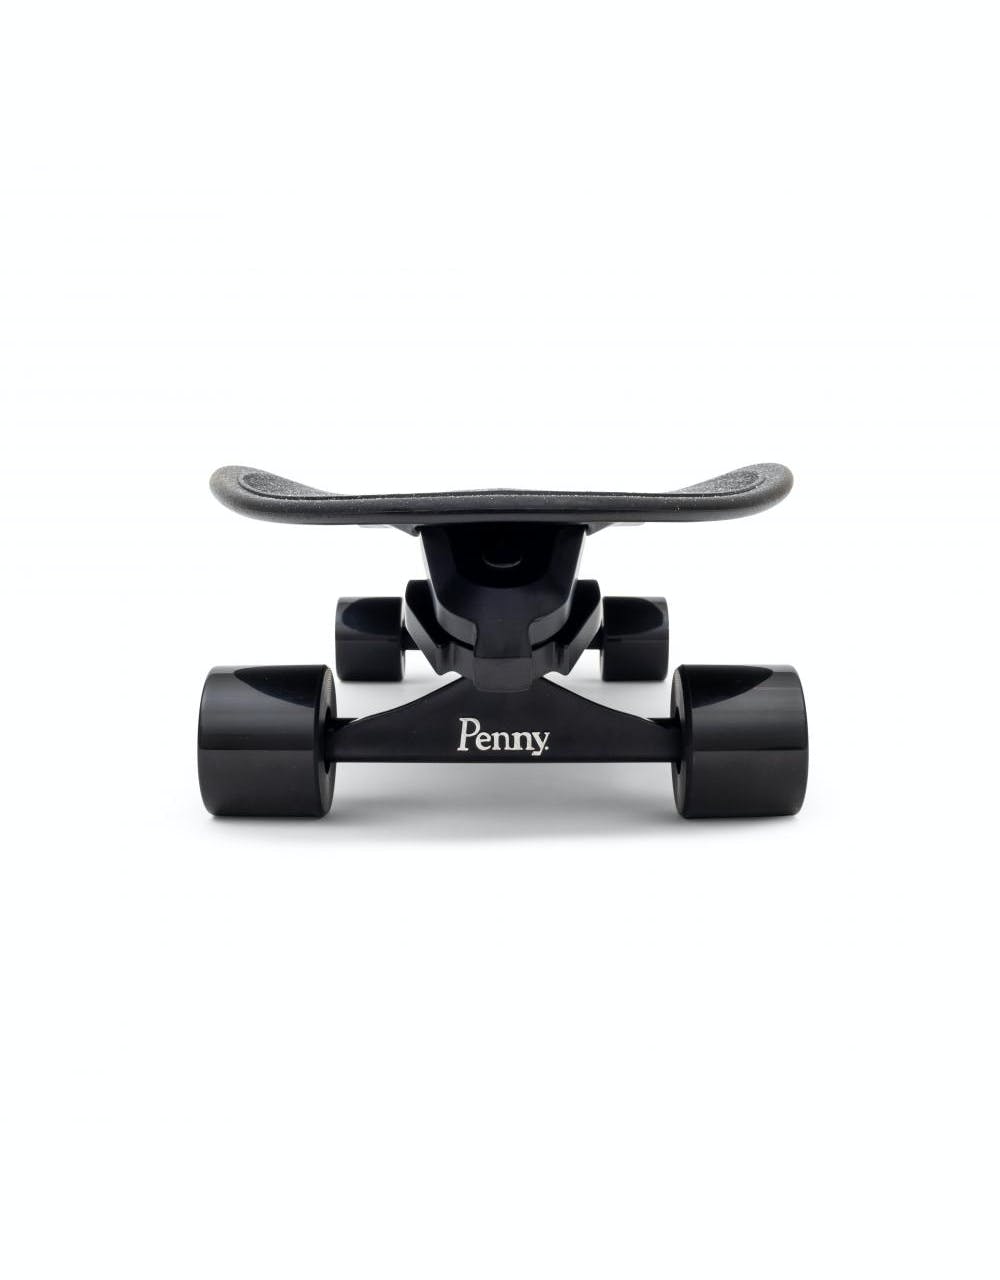 Penny Skateboards Surfskate Cruiser - 9" x 29" - Blackout